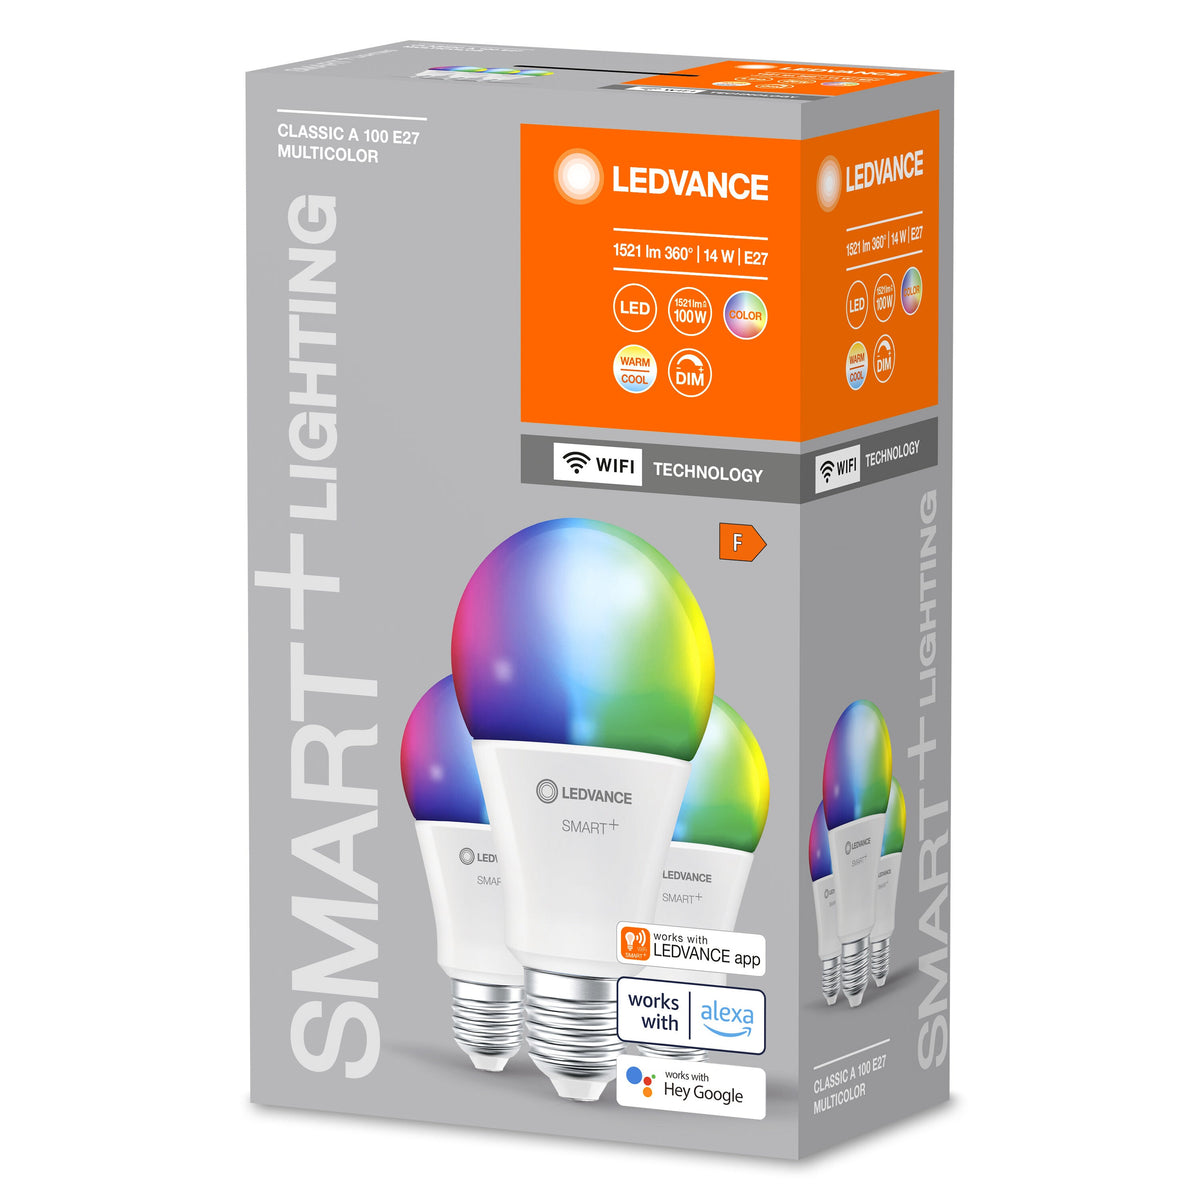 LEDVANCE WIFI SMART+ LED-Lampe RGB, weiß, 14W, 1521lm, 3er-Pack